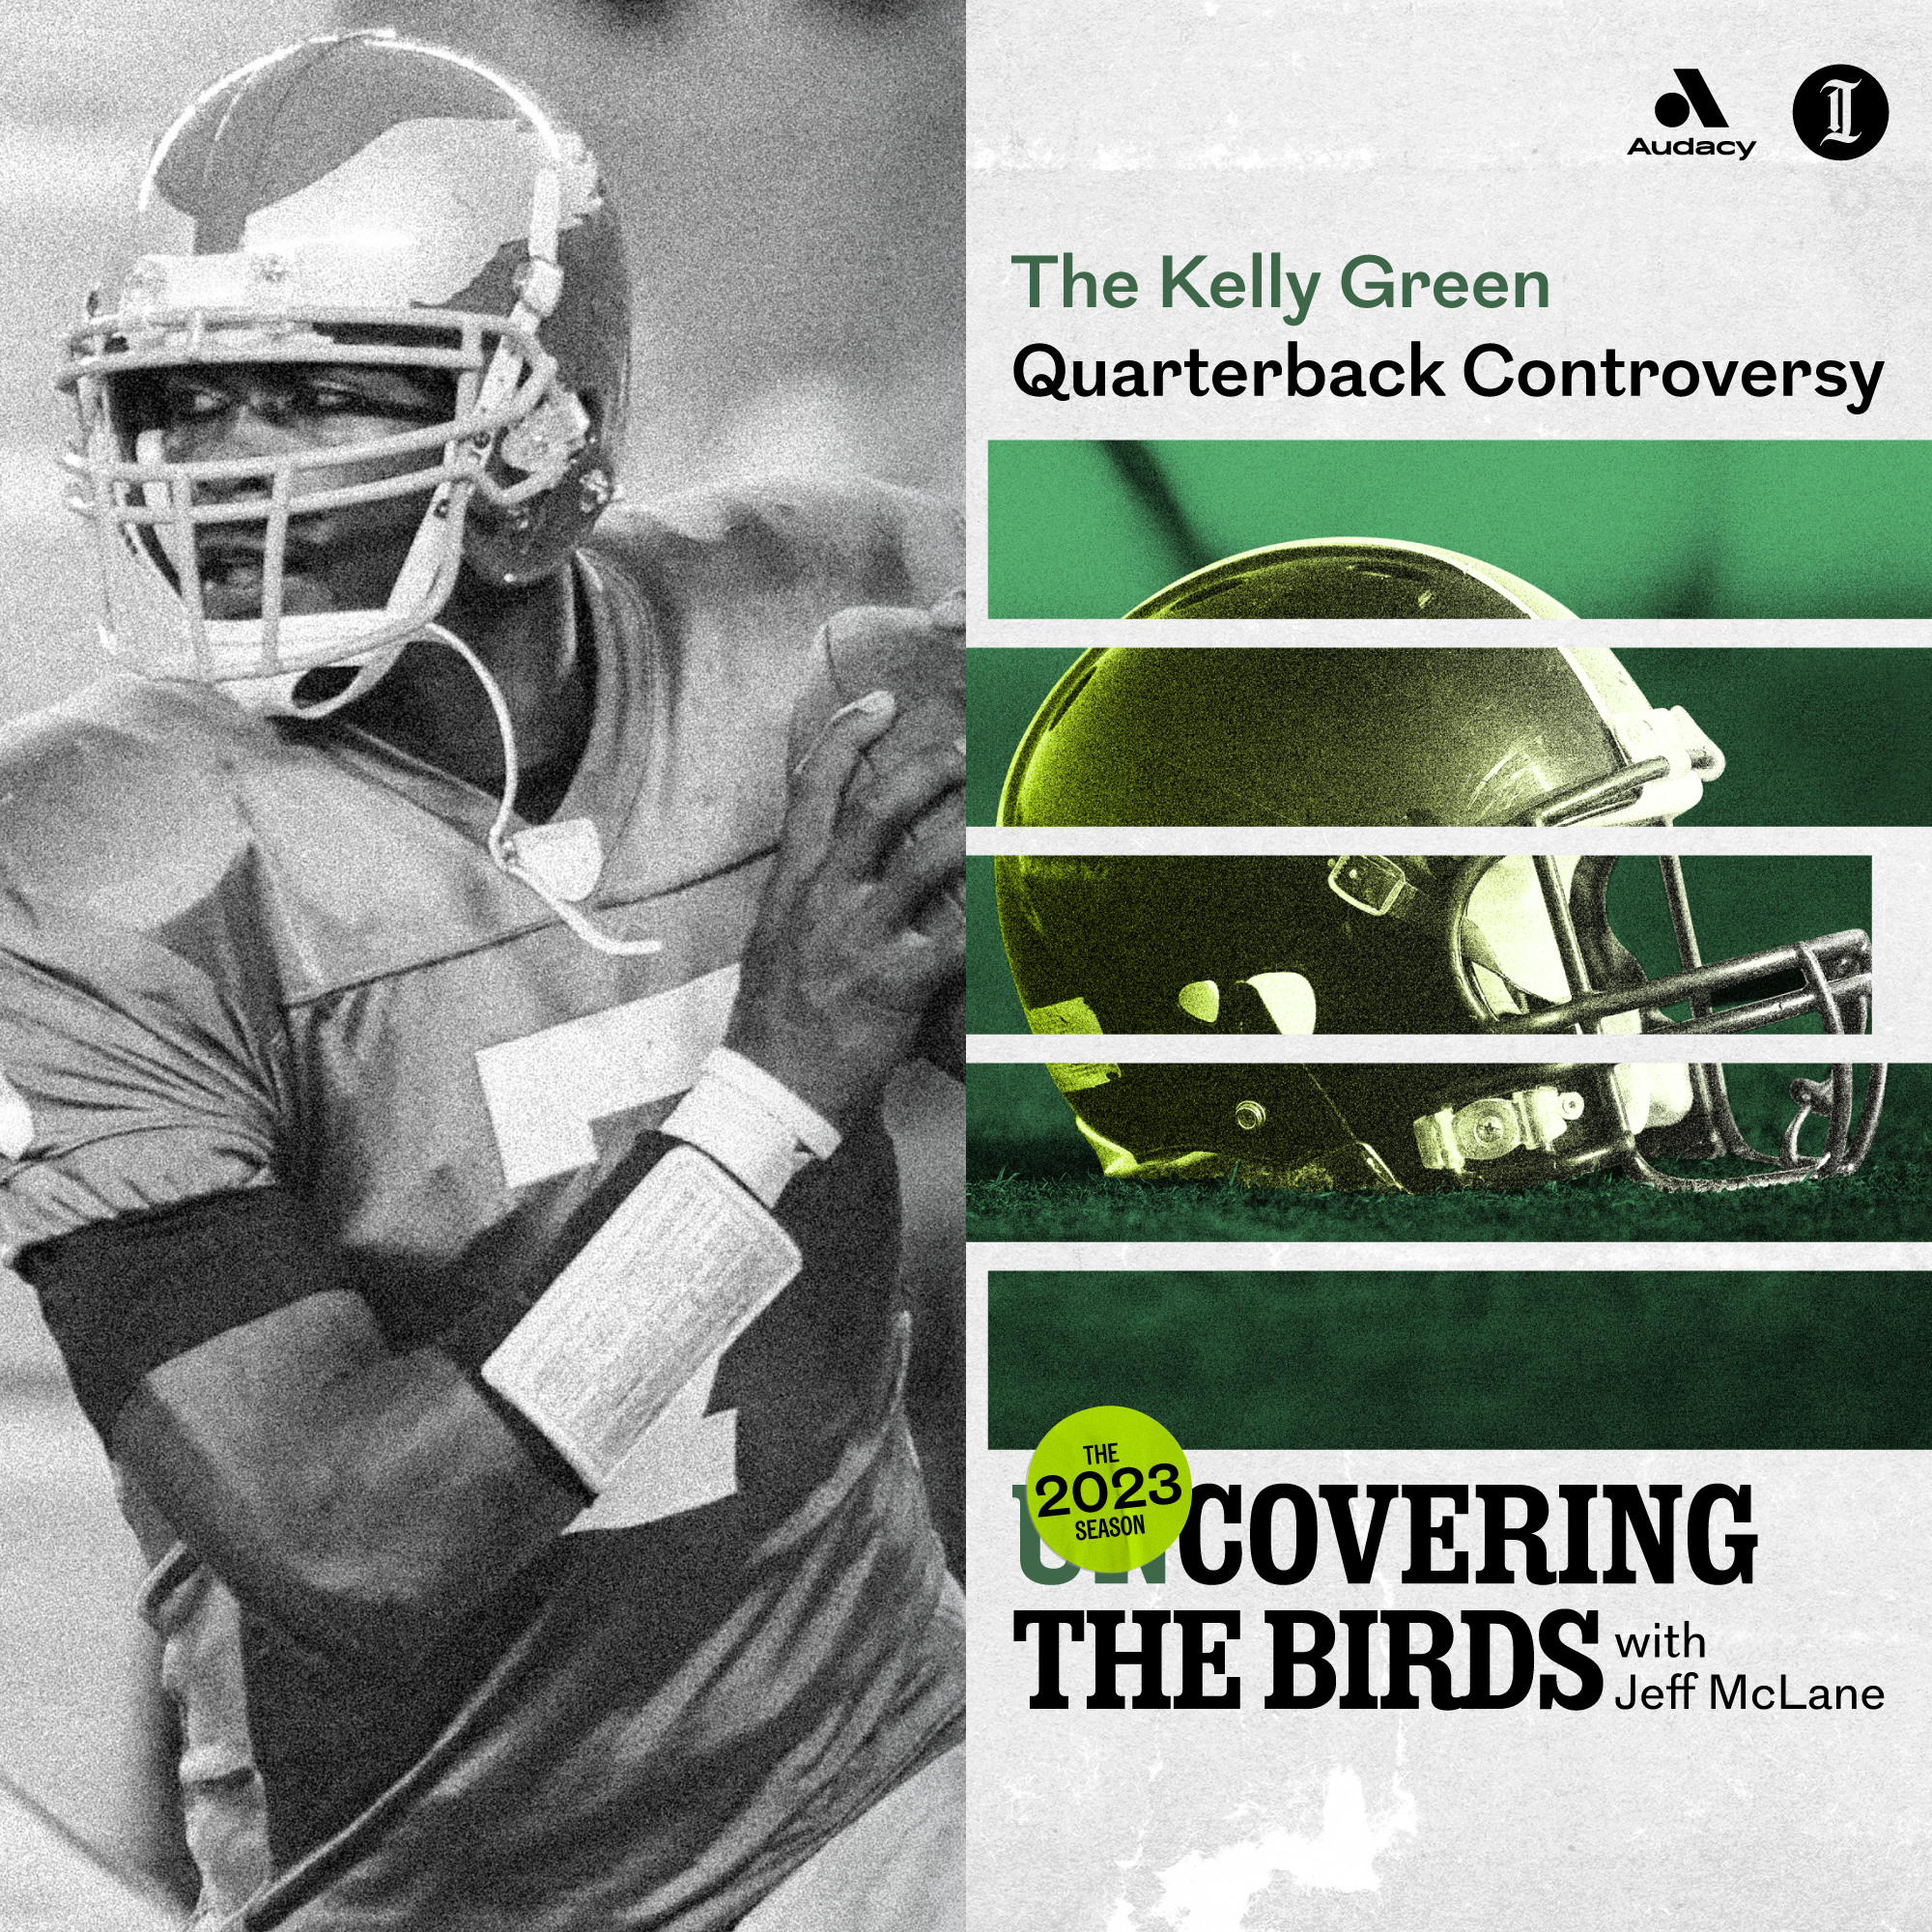 Kolb, Vick, and the Kelly Green quarterback controversy